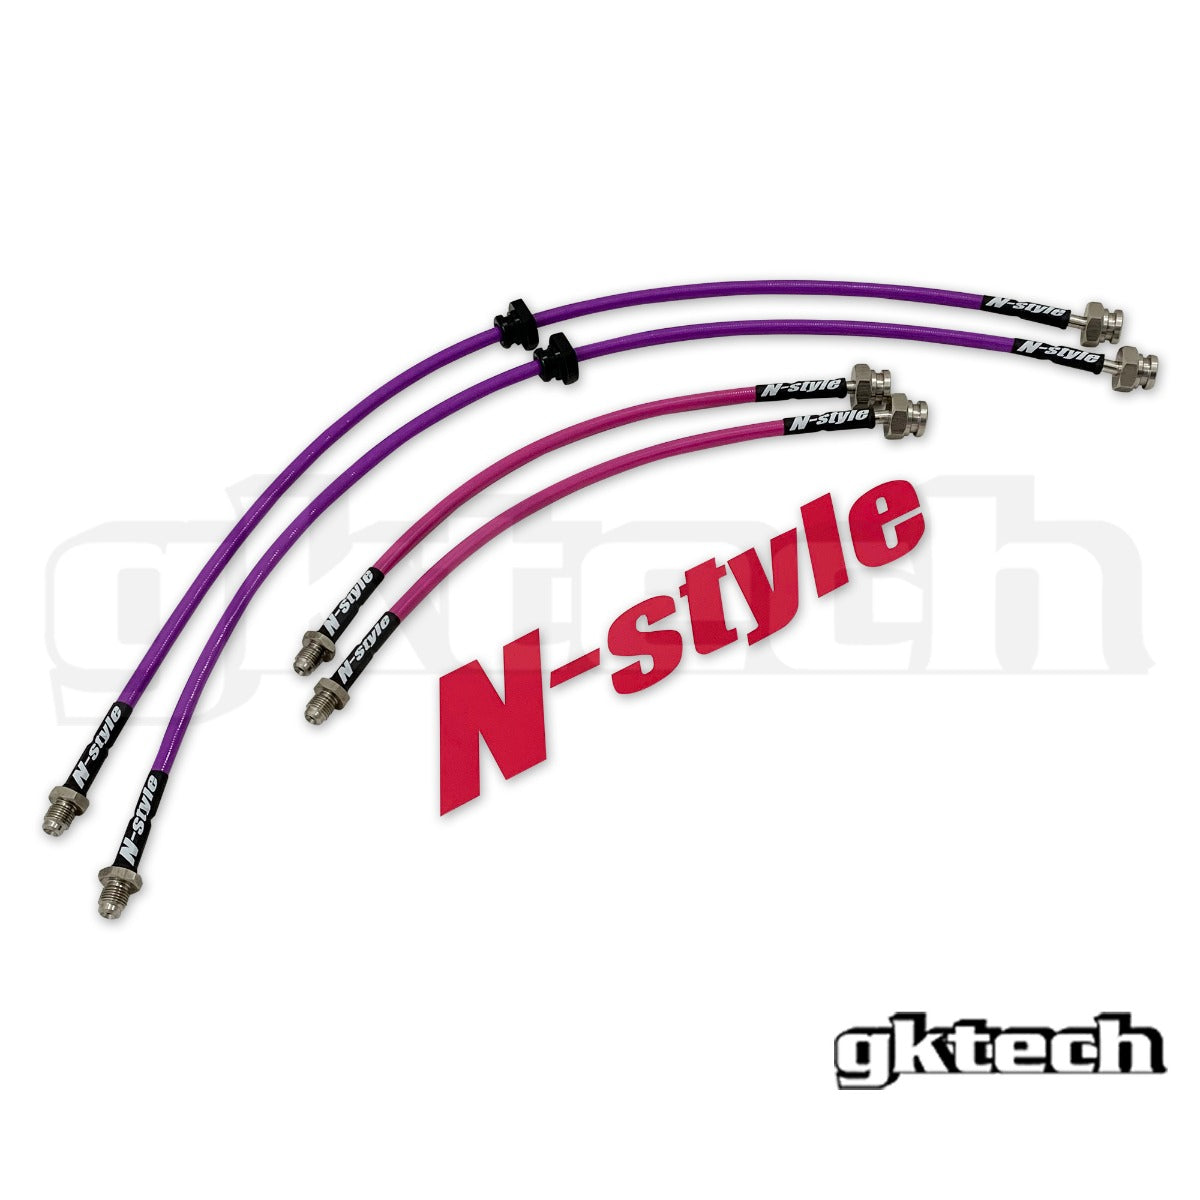 S13/180sx to Z32/GTST/GTR conversion braided brake lines